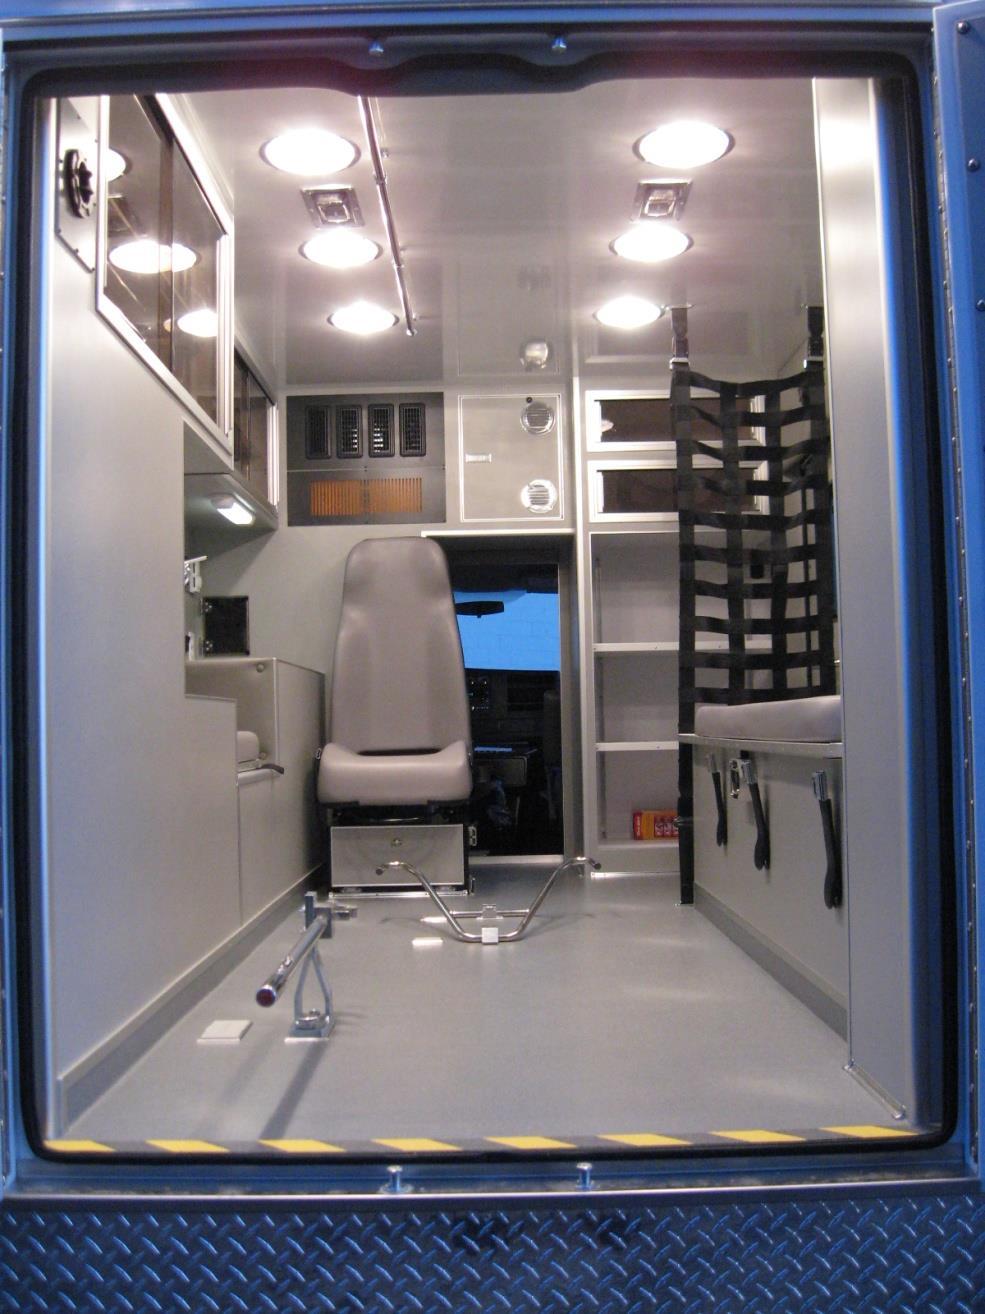 Chevy Metro Express 150 Type III Ambulance